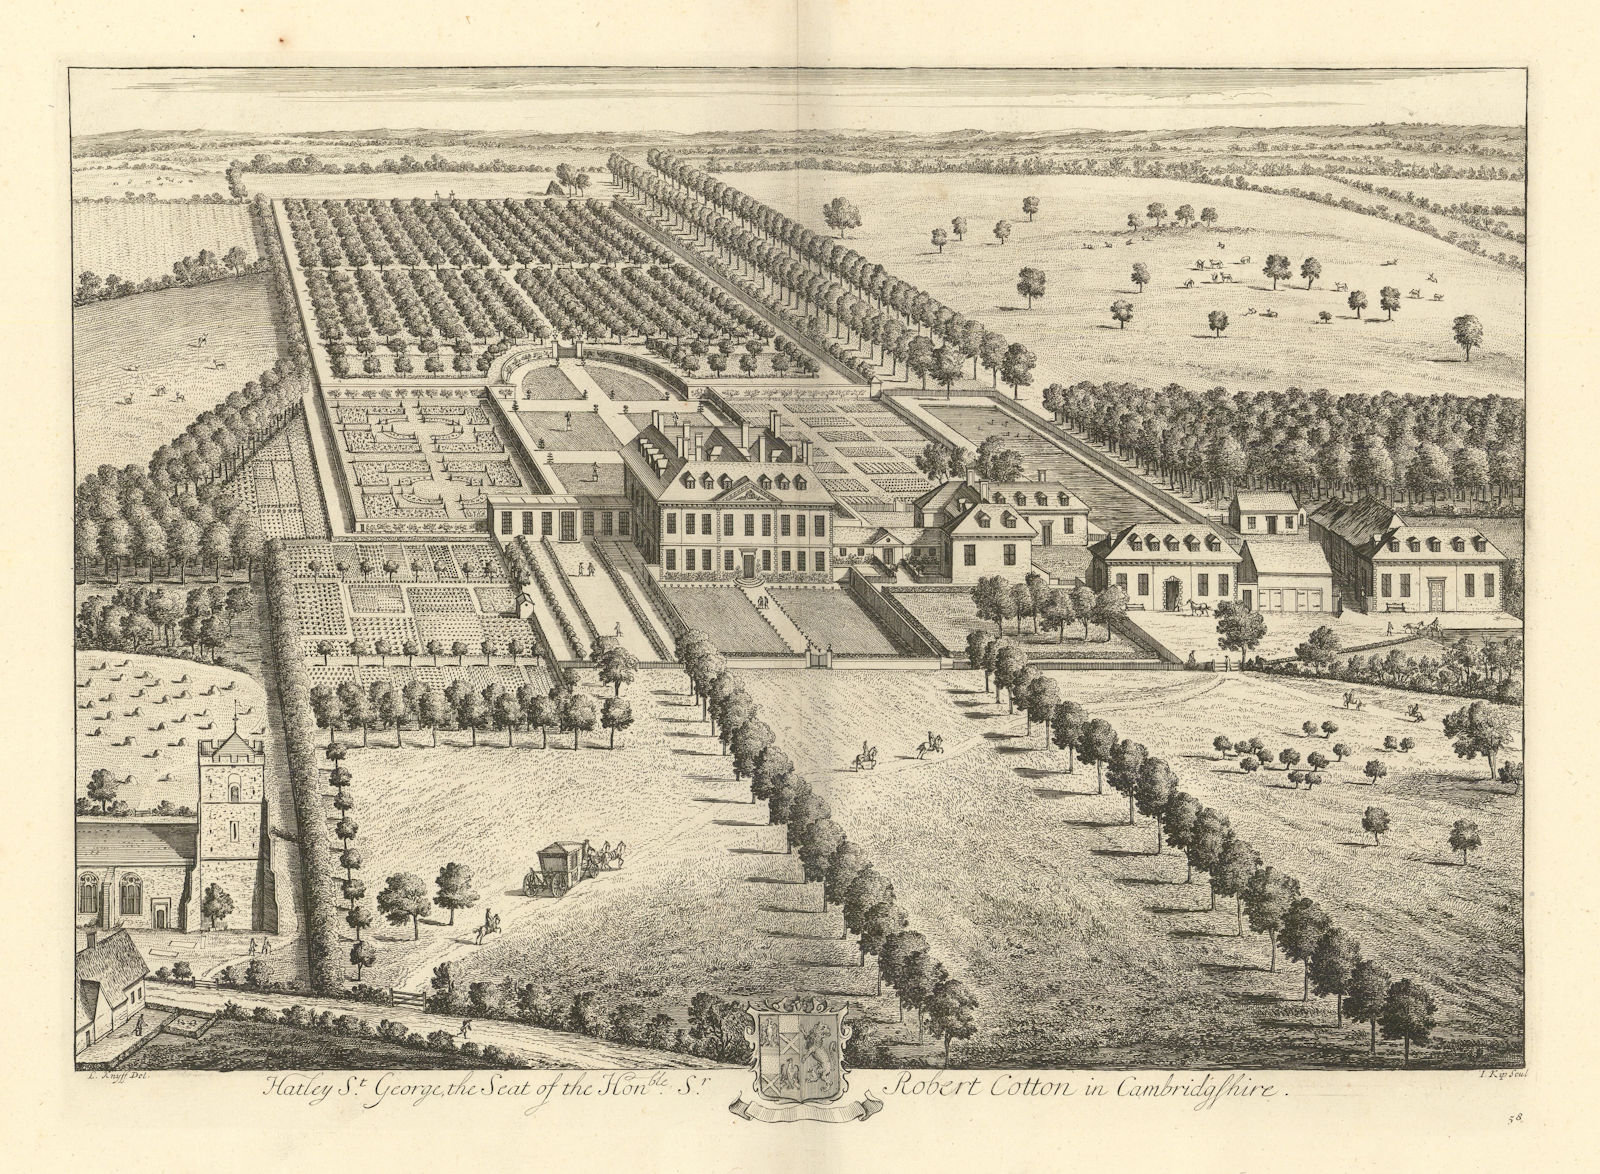 Hatley Park, Hatley St George, Cambridgeshire by Kip & Knyff. Robert Cotton 1709